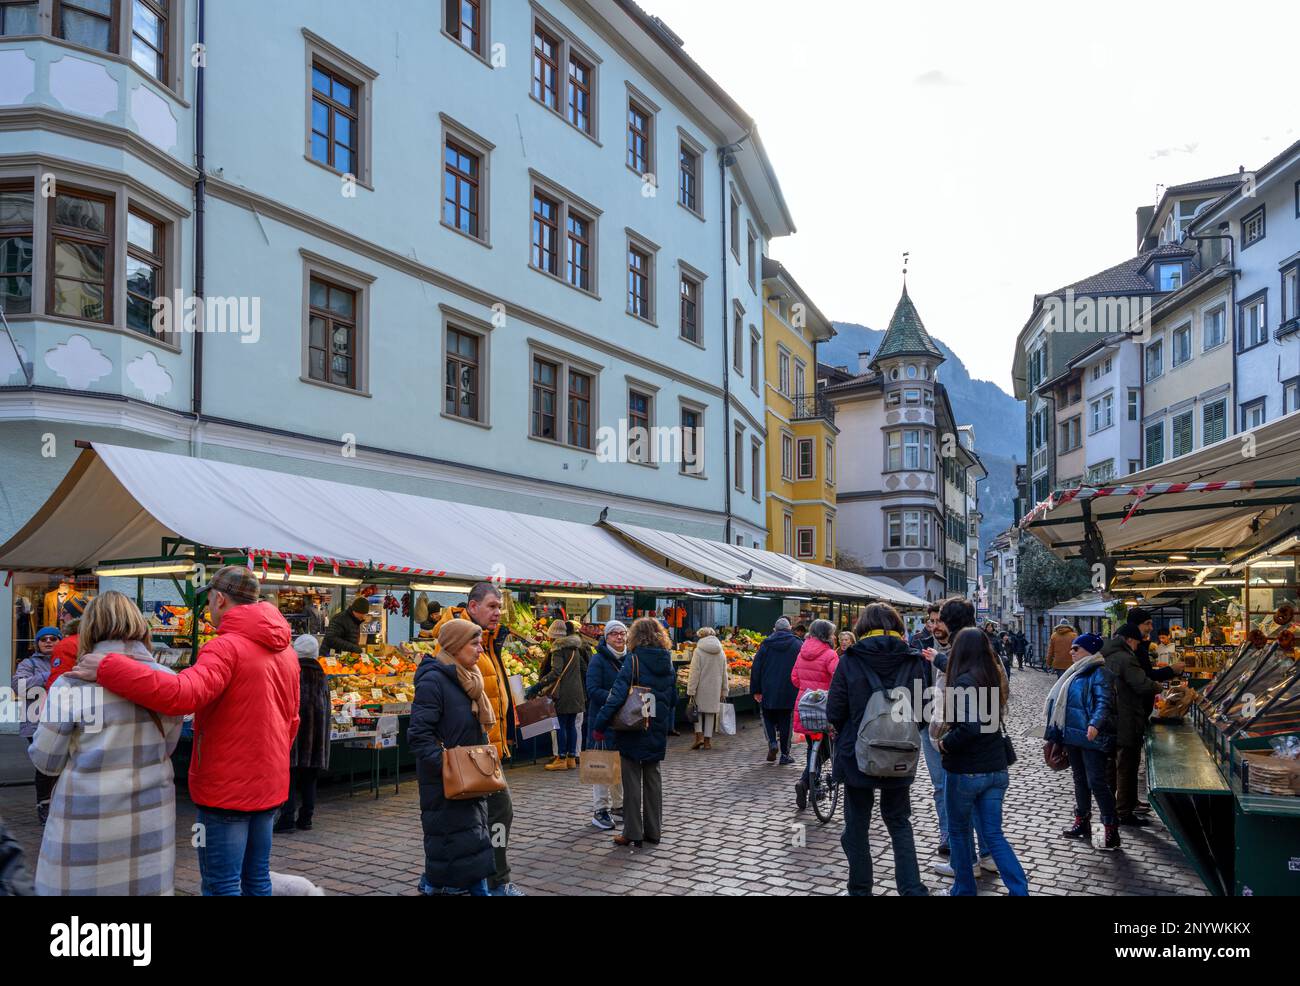 Market stalls on Piazza delle Erbe, Bolzano, Italy (Bozen) Stock Photo